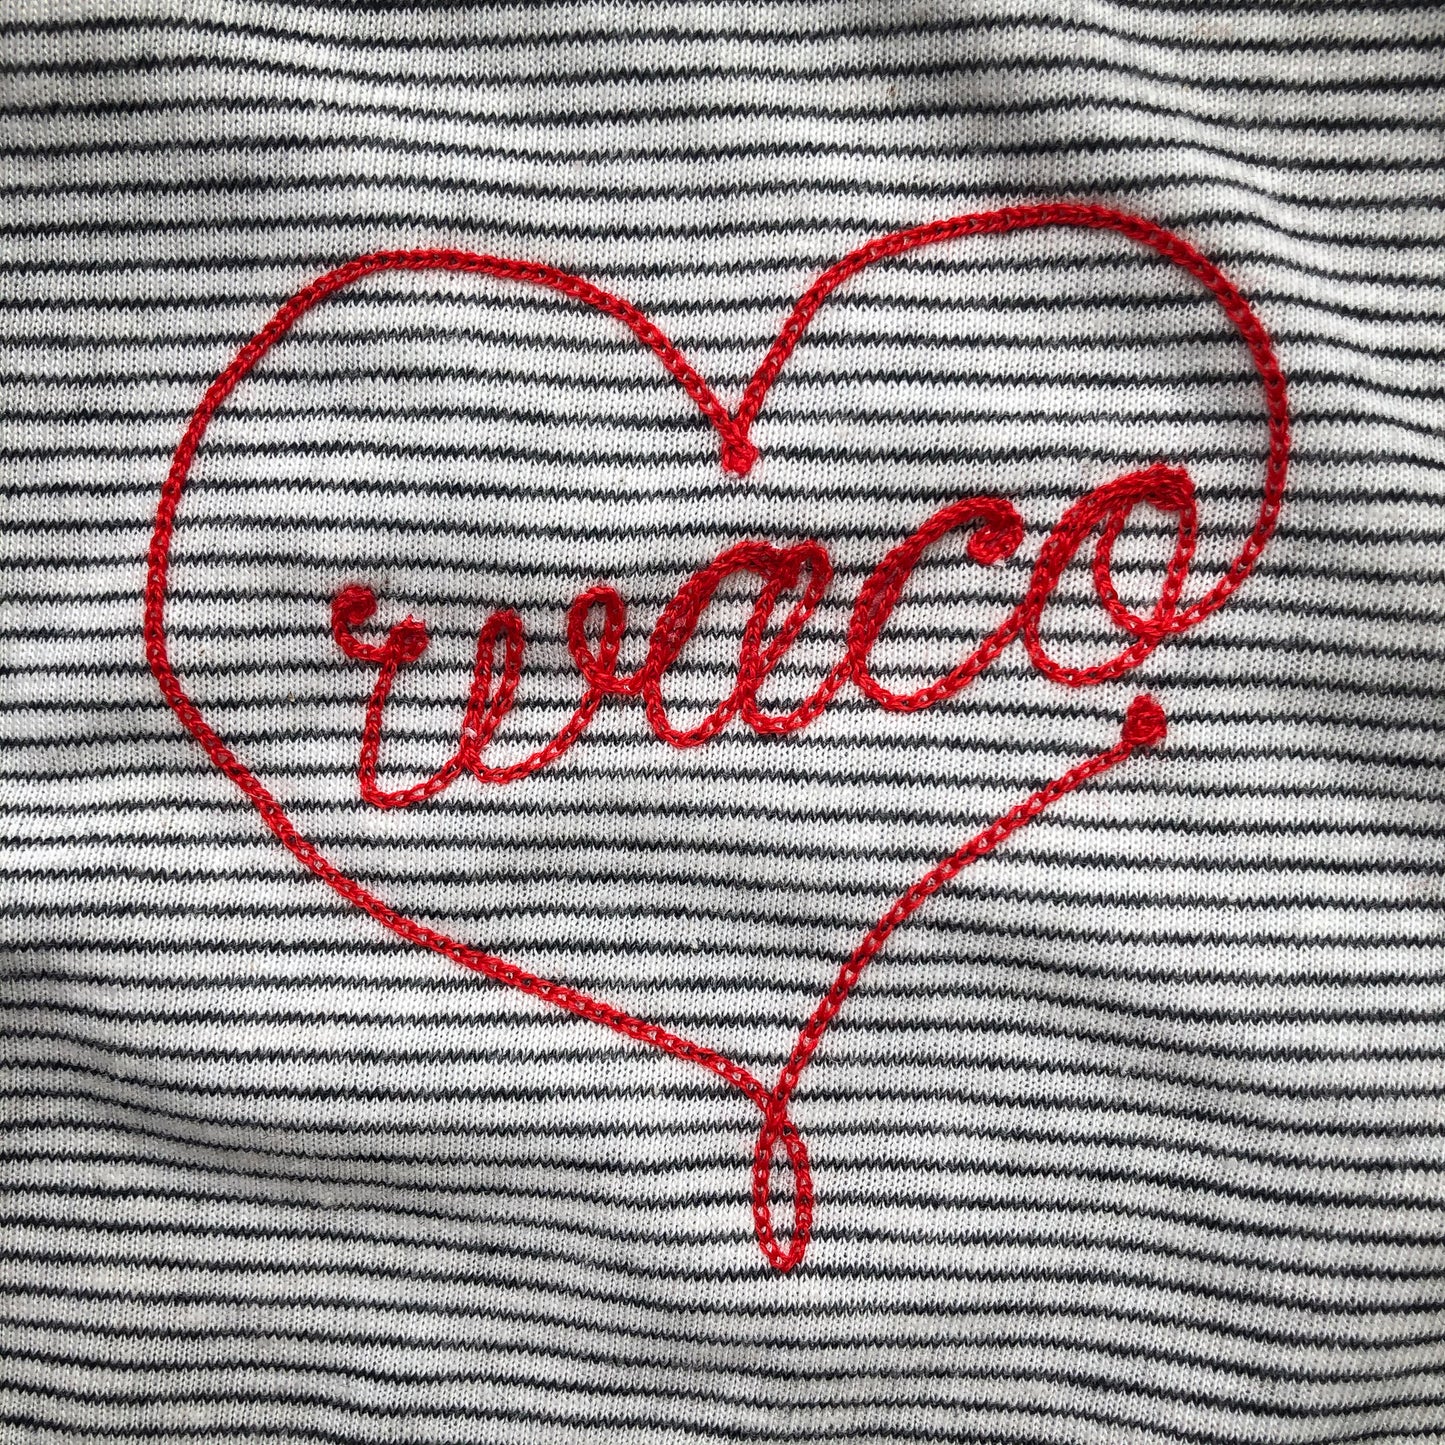 Wren Stitch Love Waco